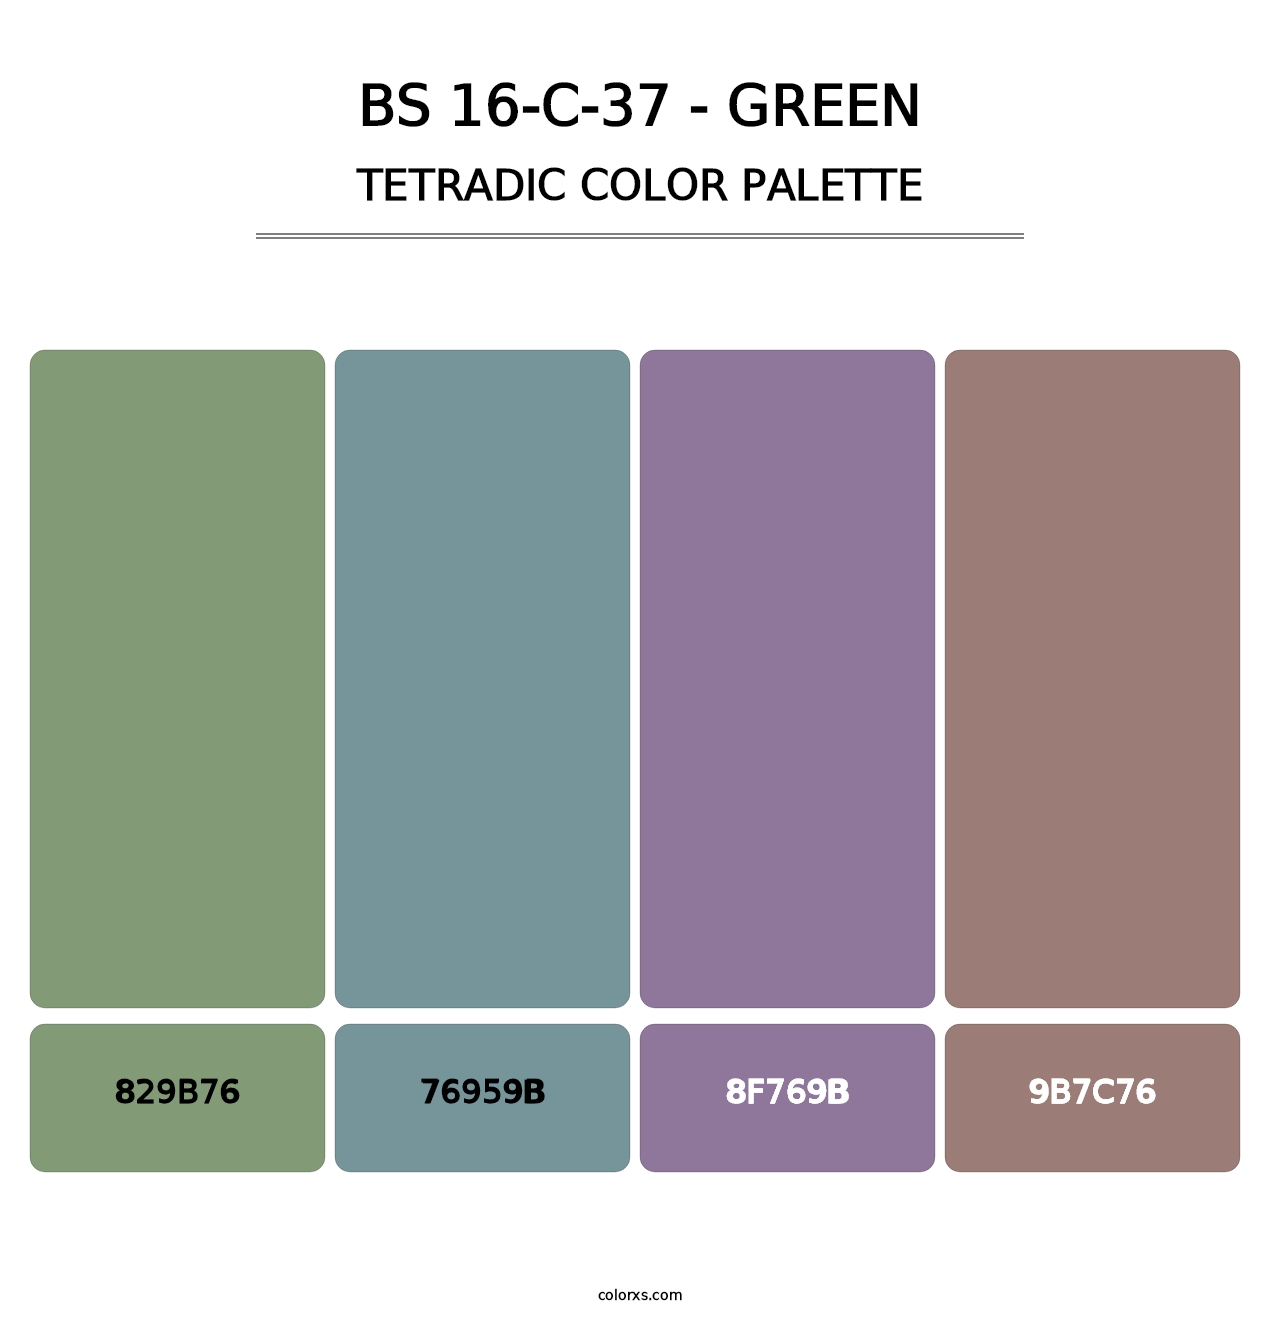 BS 16-C-37 - Green - Tetradic Color Palette